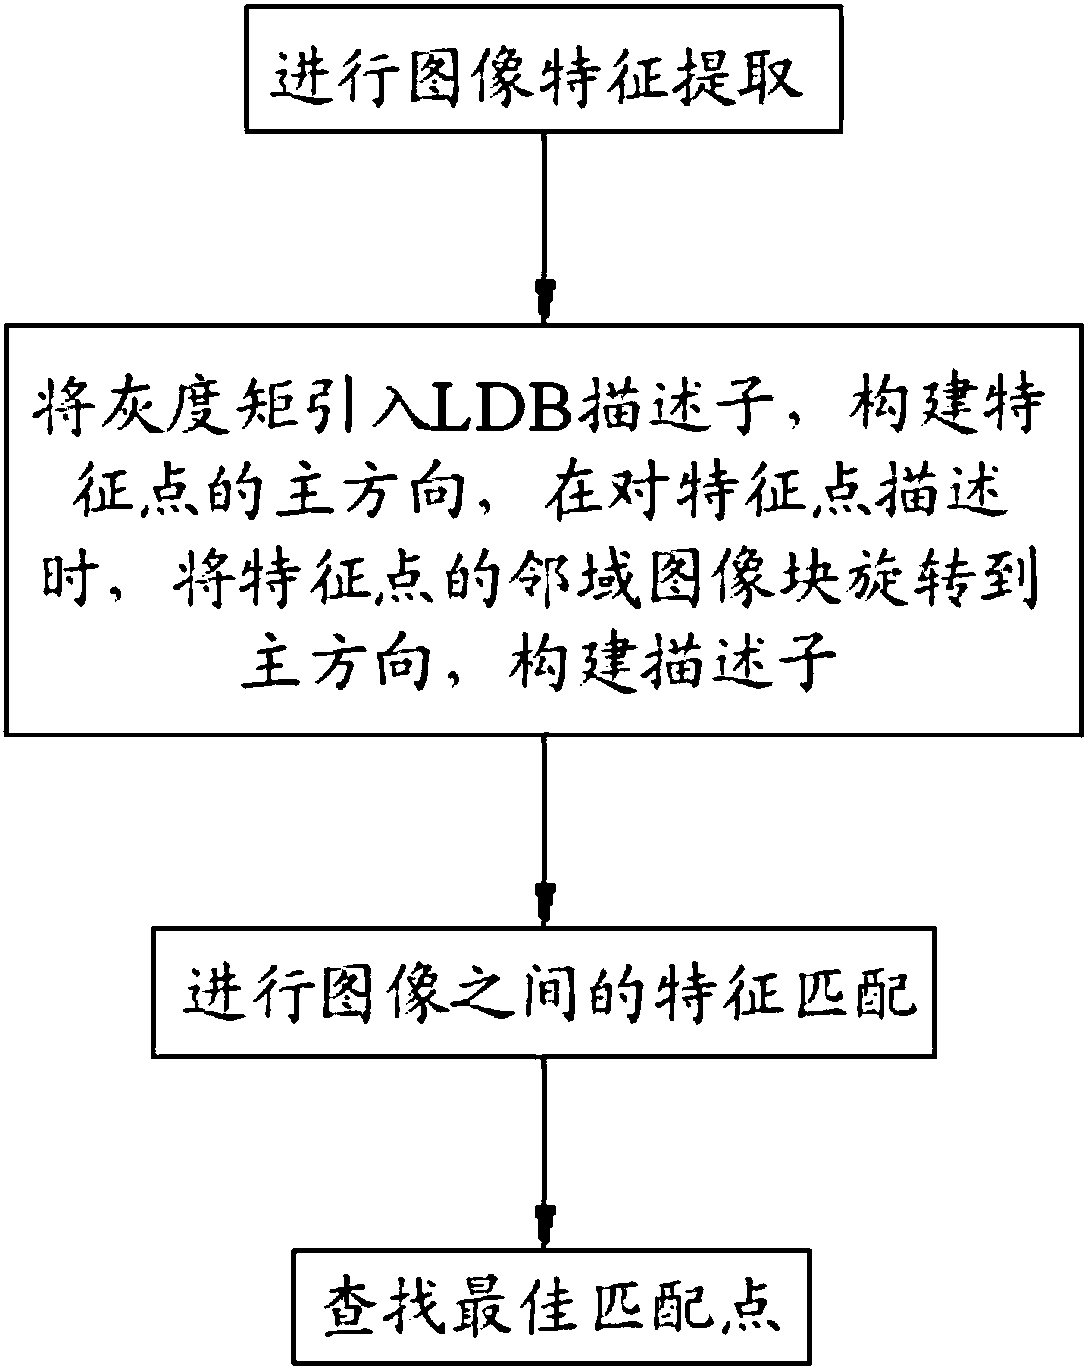 Image registration method and apparatus